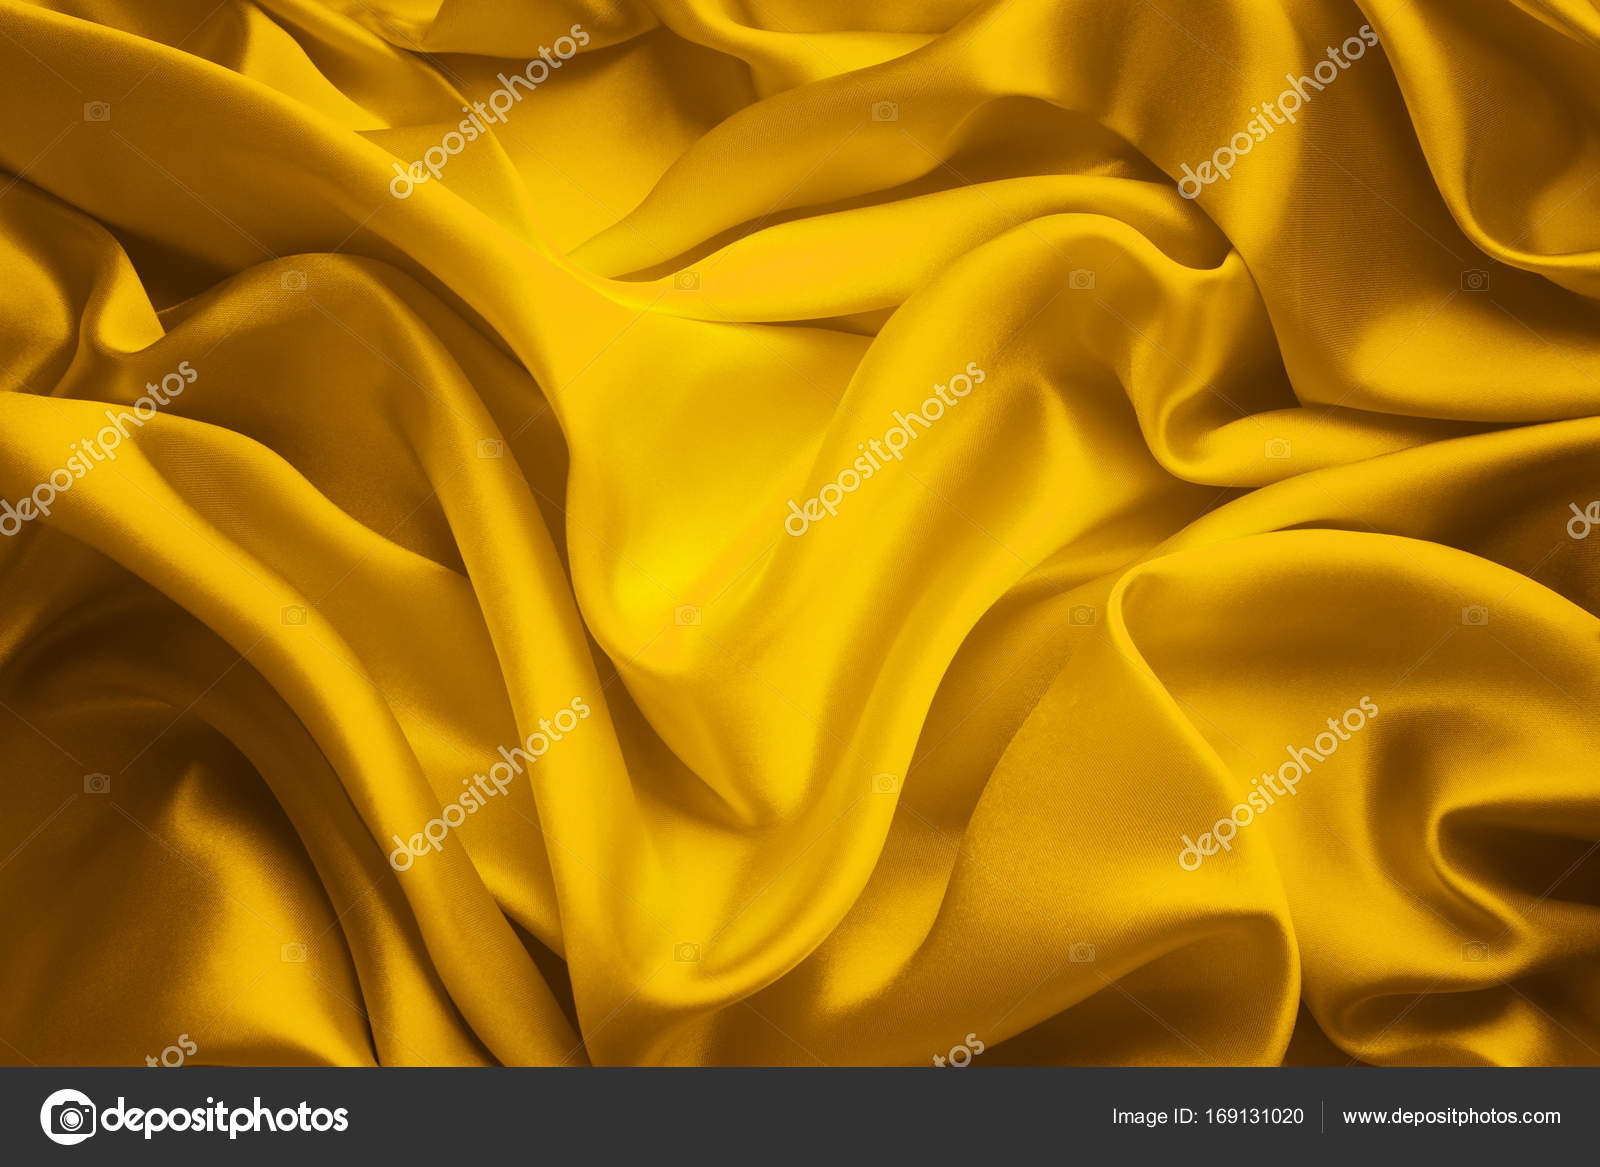 https://st3.depositphotos.com/1005721/16913/i/1600/depositphotos_169131020-stock-photo-silk-fabric-background-yellow-satin.jpg